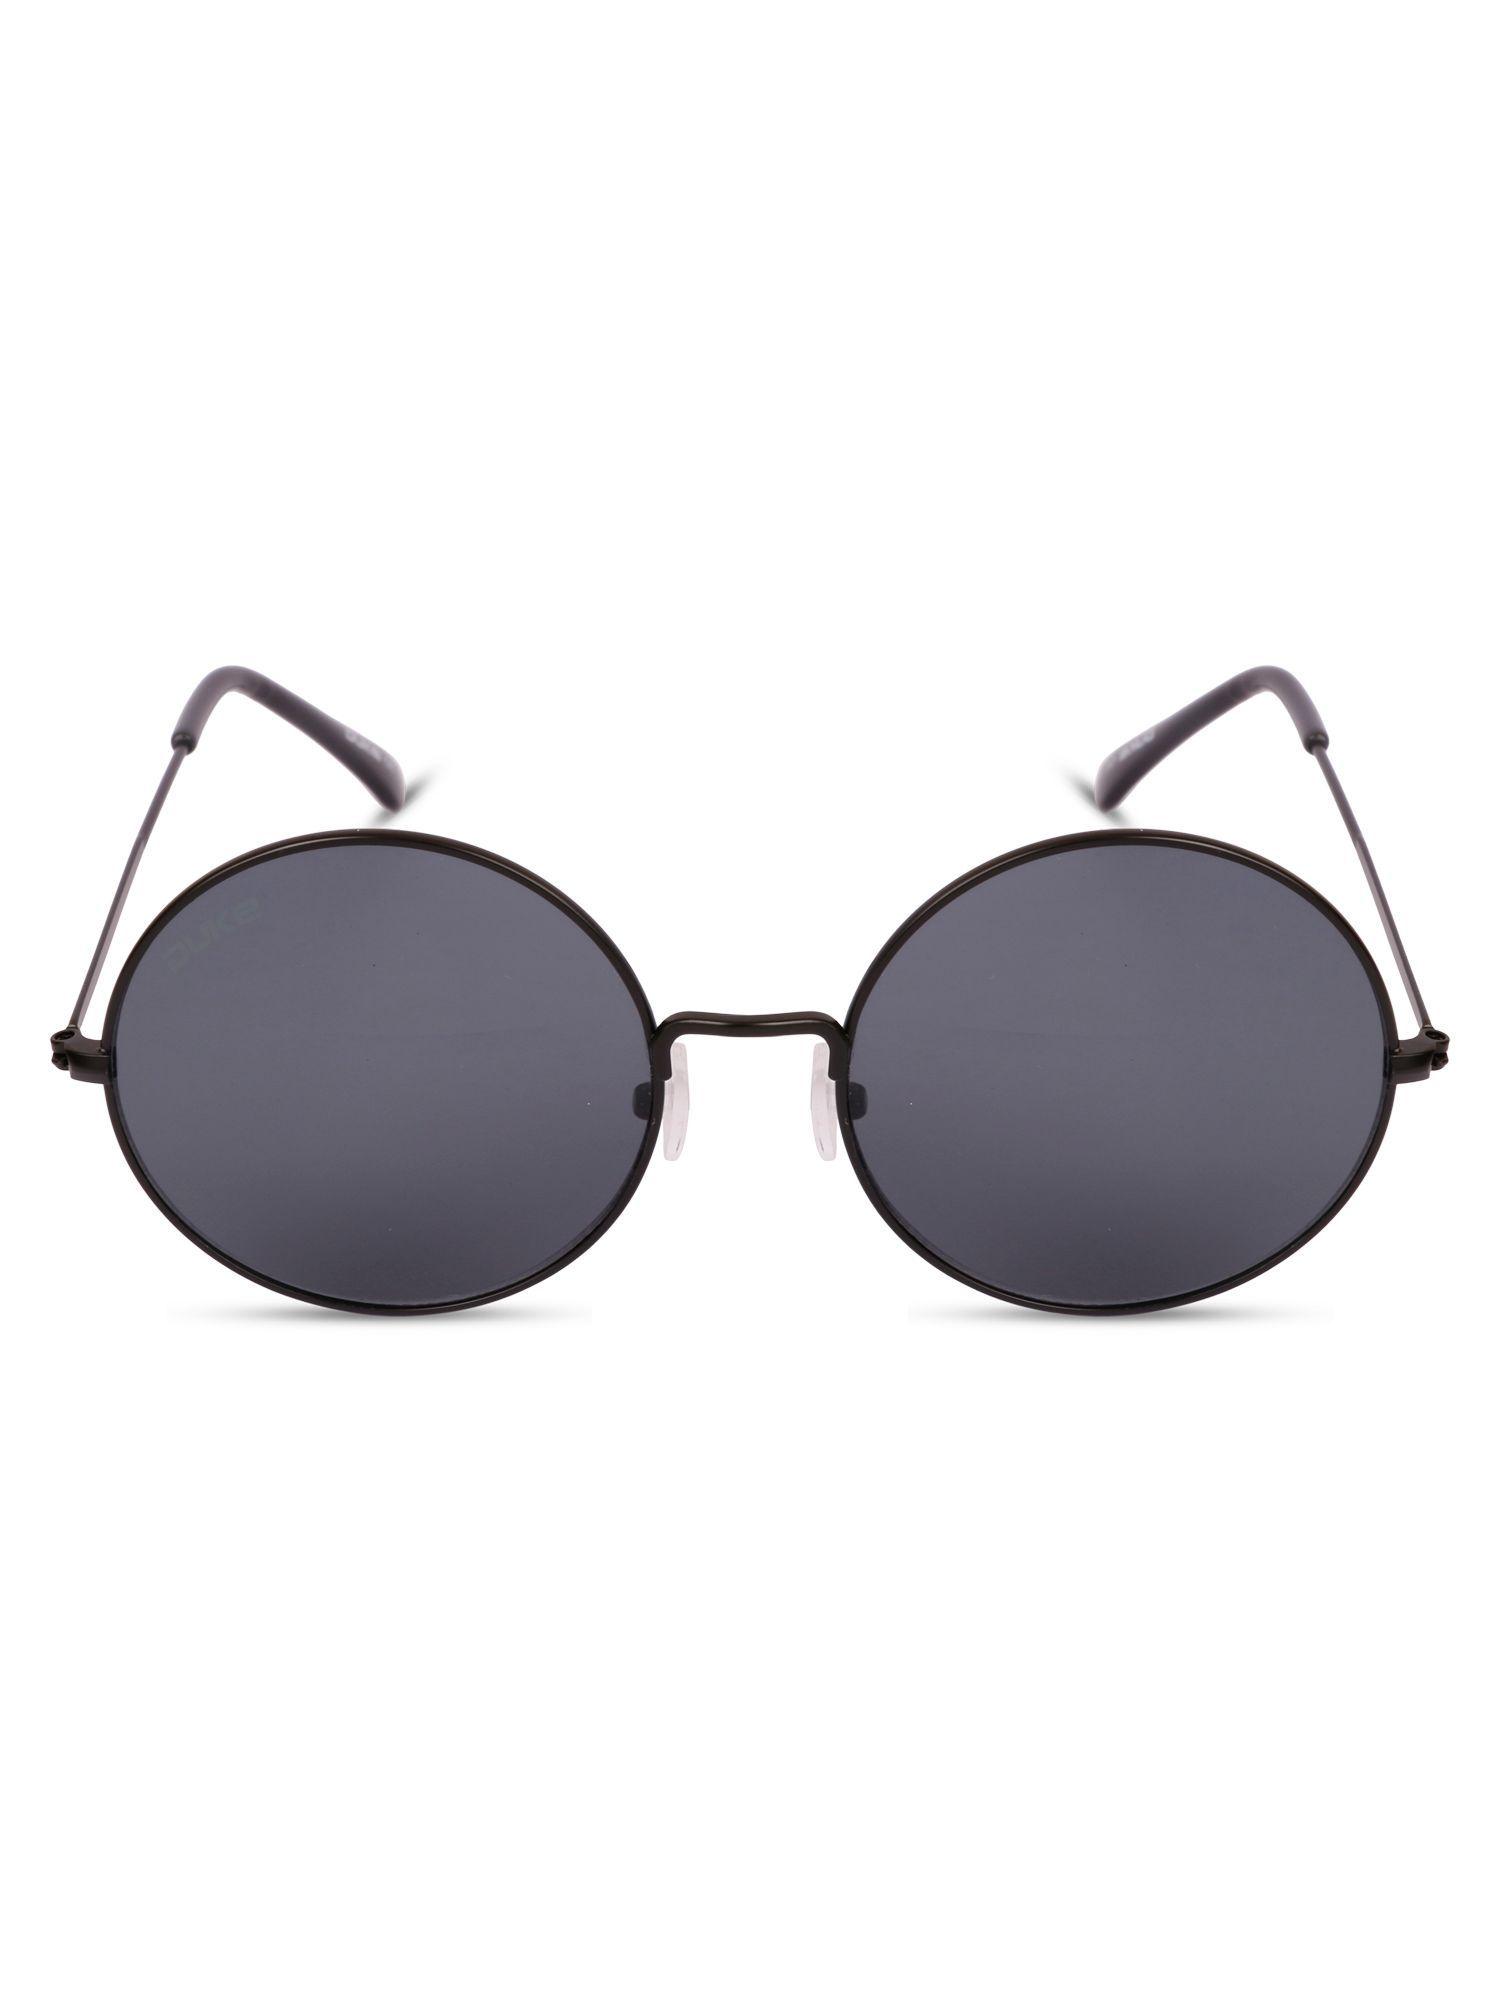 polycarbonate-uv-400-women-round-sunglasses--duke-a20067-c9